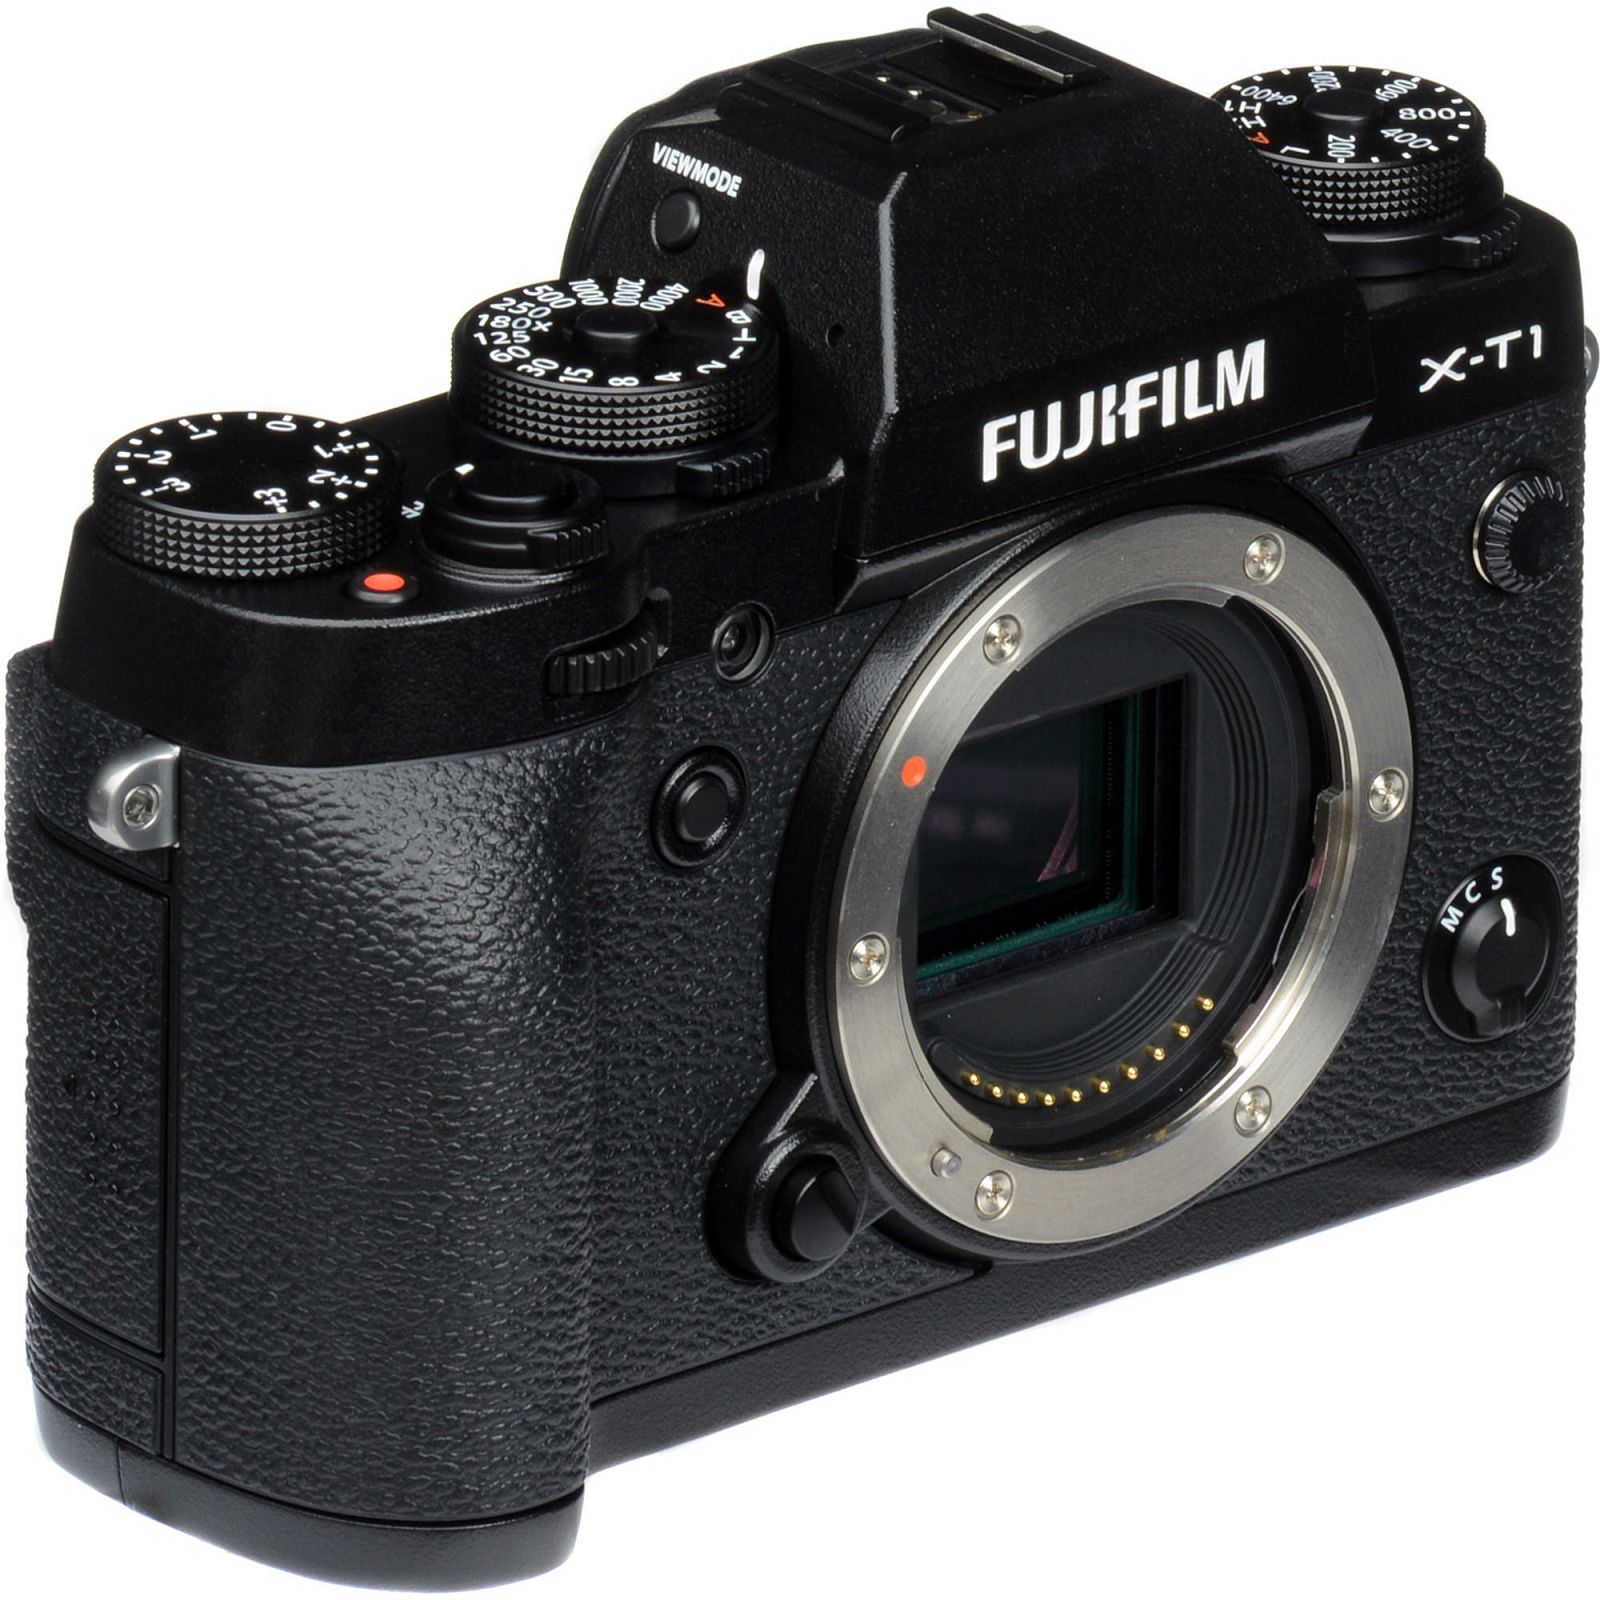 Fuji X-T1 Body Fujifilm 16MP APS- Trans CMOS II, 3,0" LCD, 1,040K + OVF, Tiltable